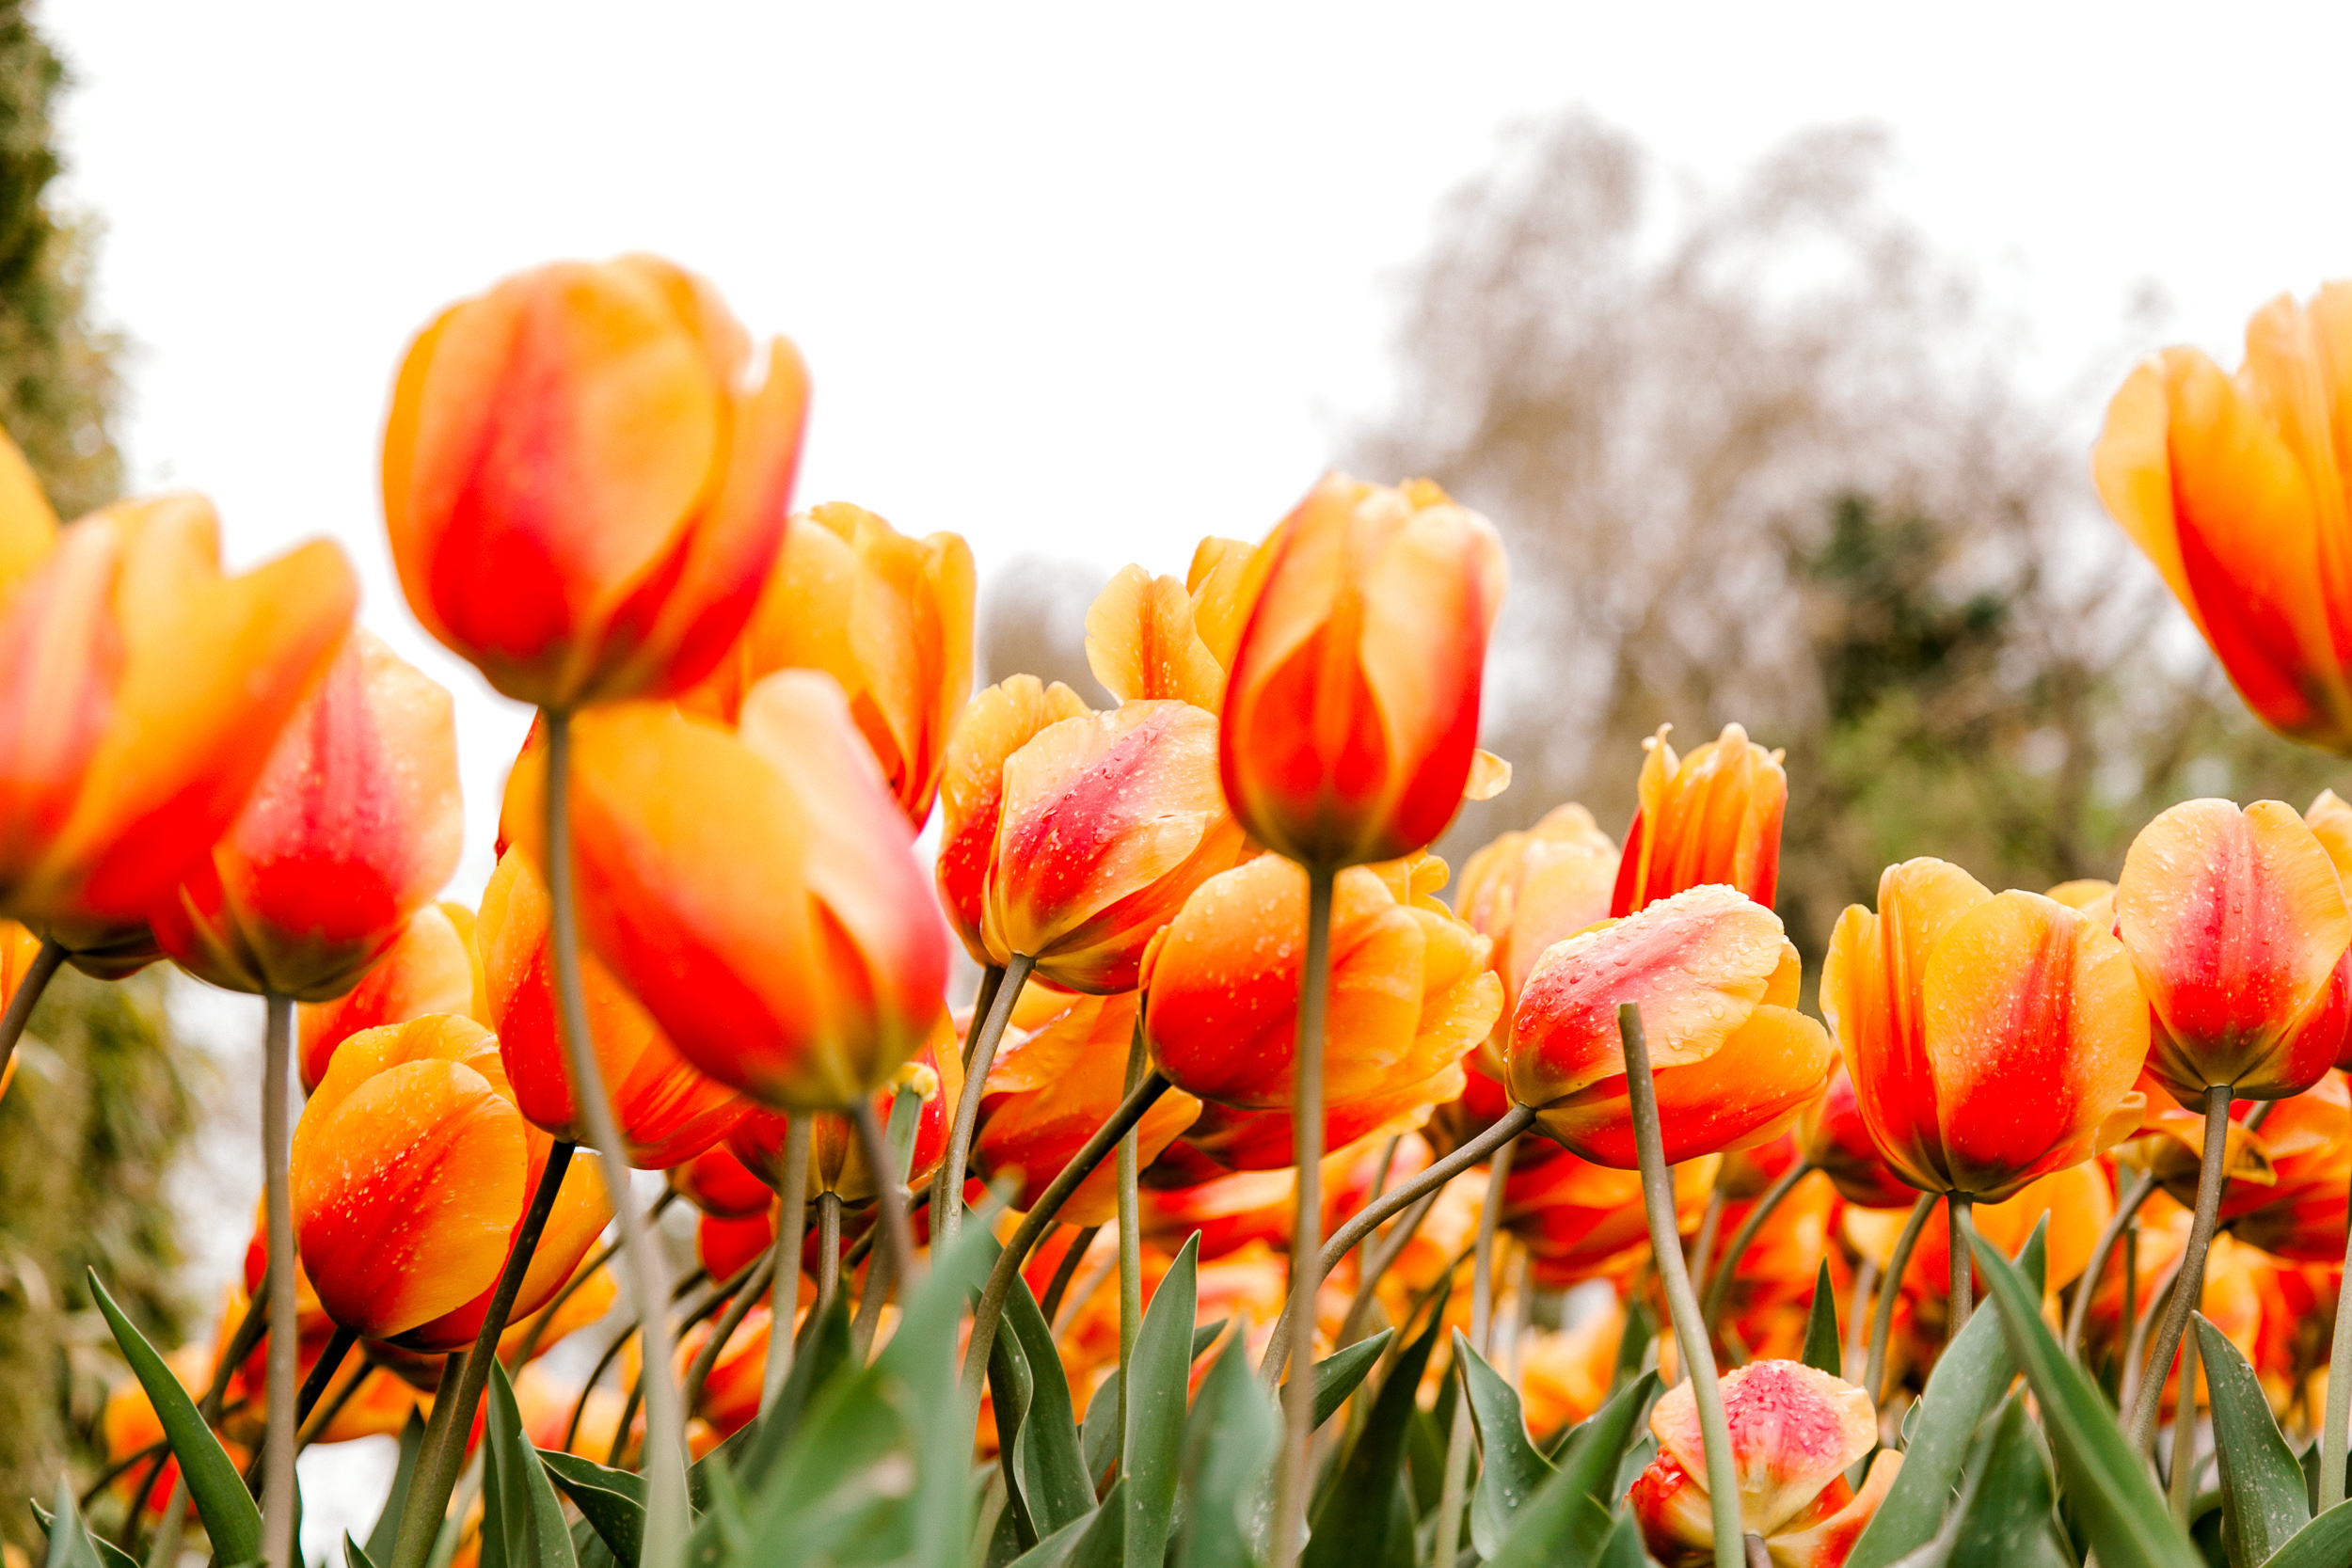 tulips-skagit-wa-abbey-taylor-2.jpg